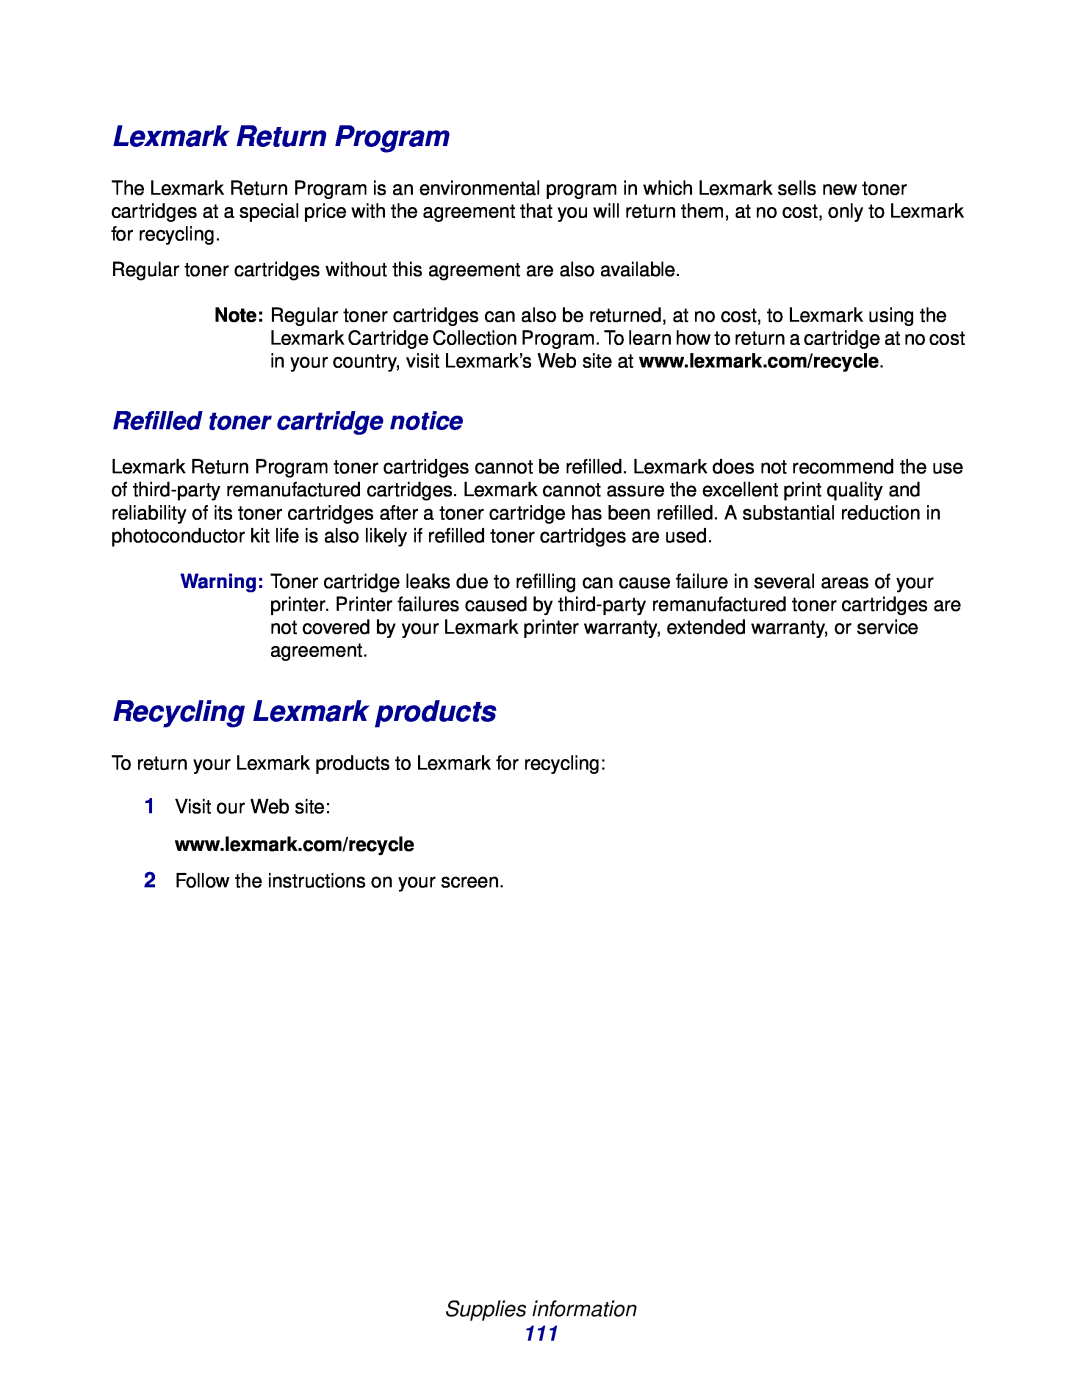 Lexmark 232, 230 Lexmark Return Program, Recycling Lexmark products, Refilled toner cartridge notice, Supplies information 